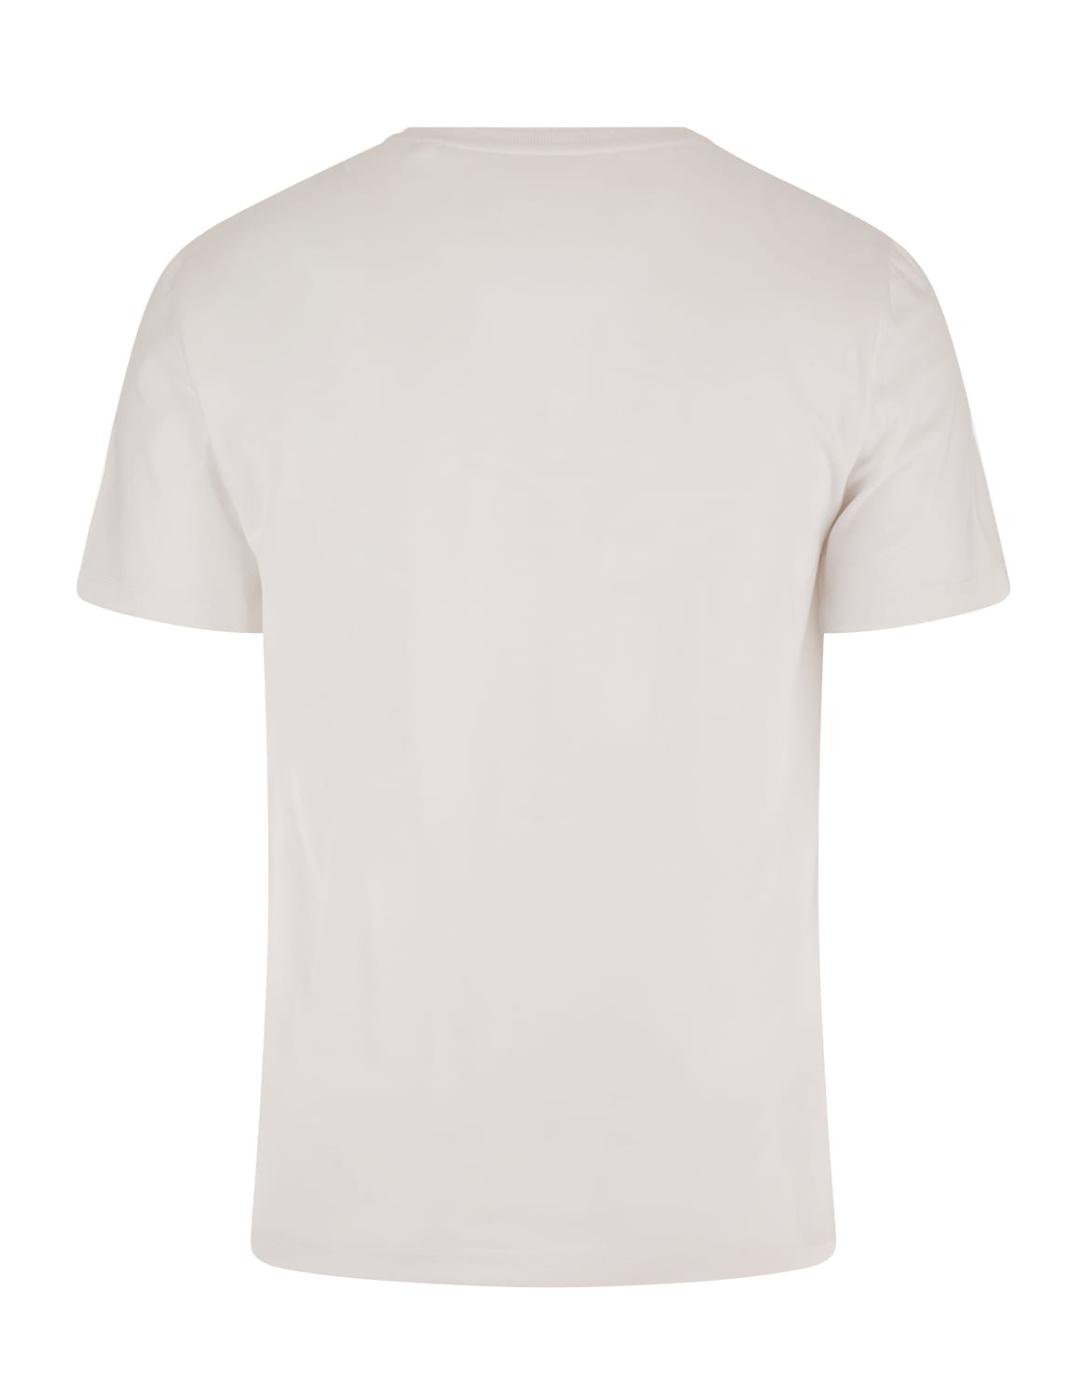 Camiseta Guess triangulo blanca manga corta para hombre